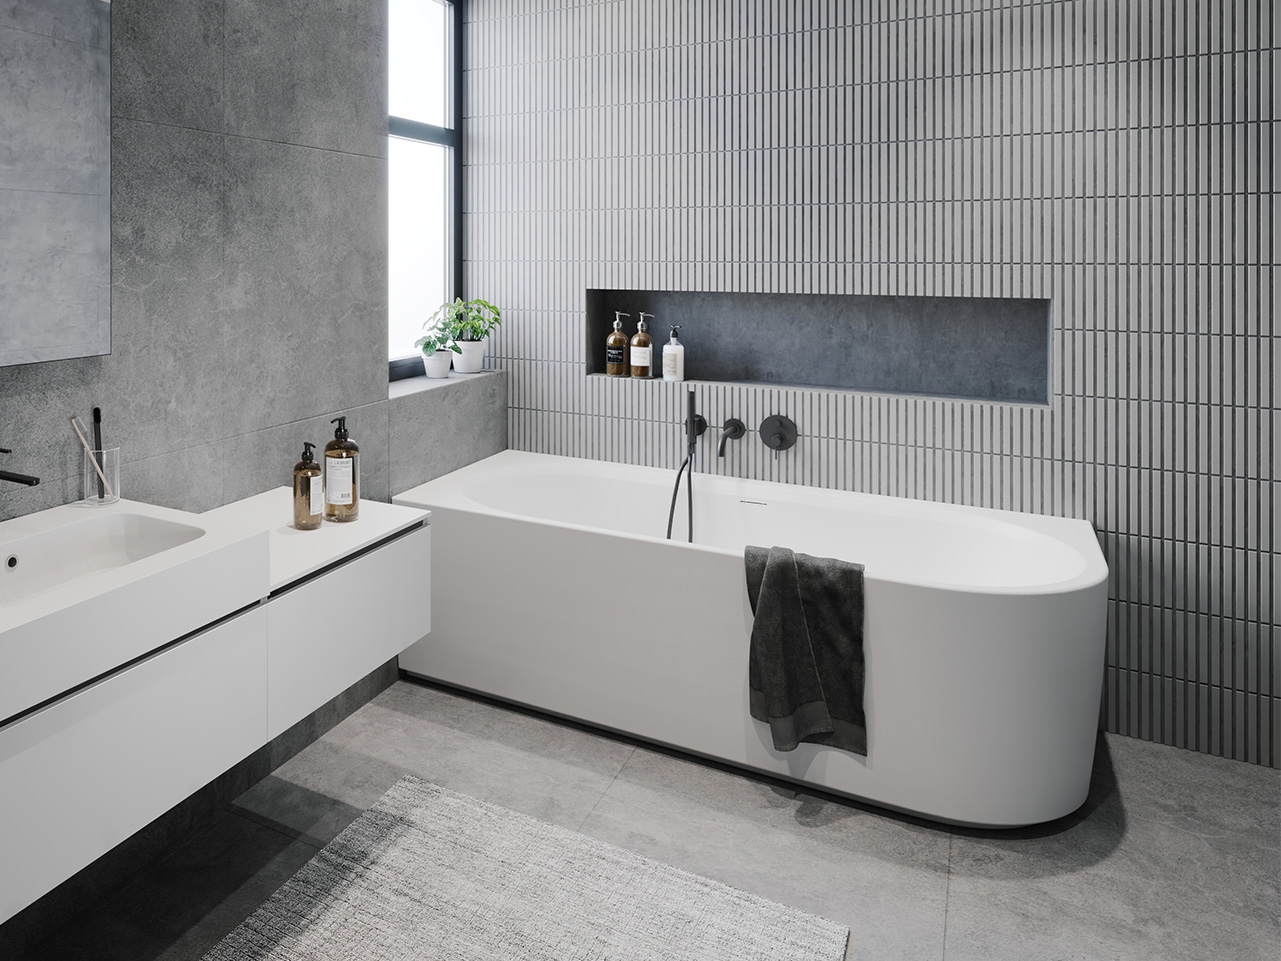 Foto: Desire corner half vrijstaand bad hoekbad semi freestanding bathtub baignoire semi ilot halb freistehende badewanne web